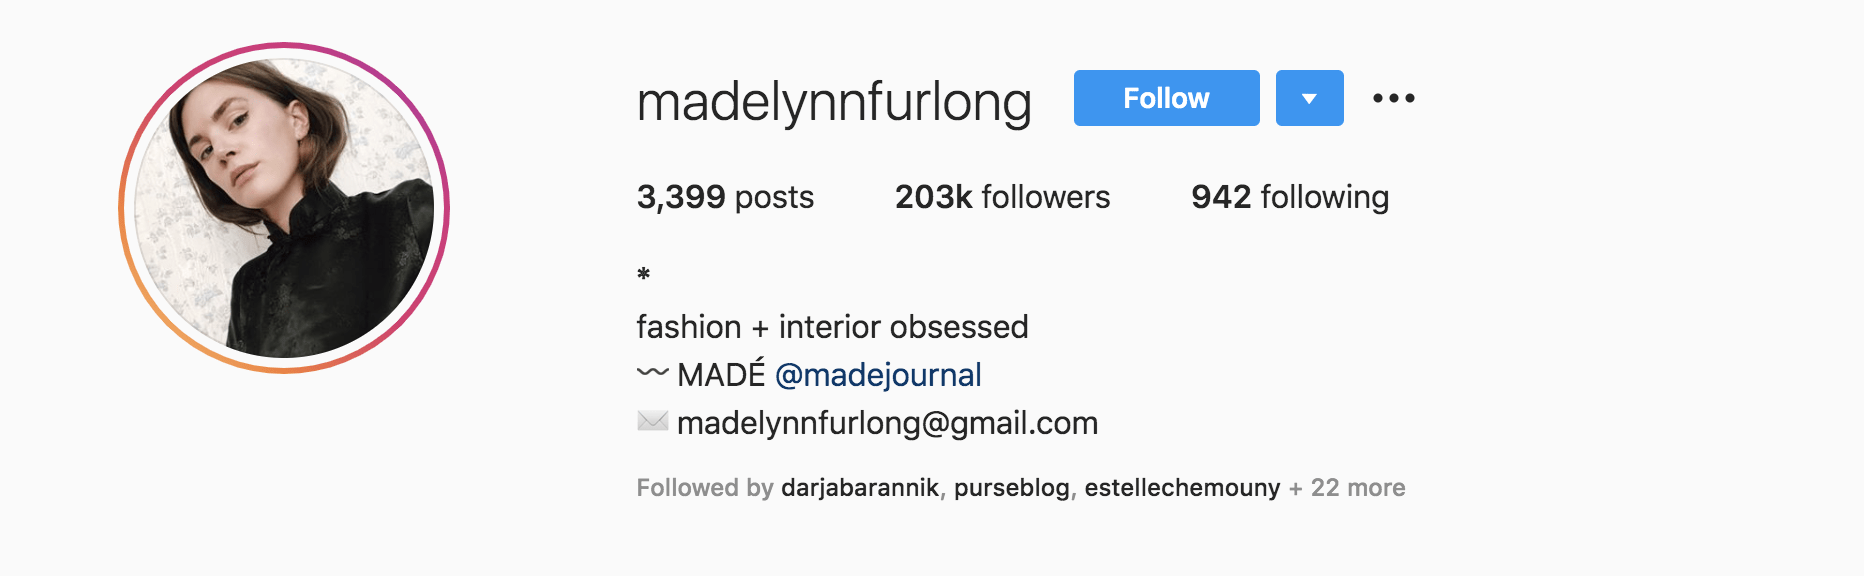 Top Fashion Influencers - Madelynn Furlong